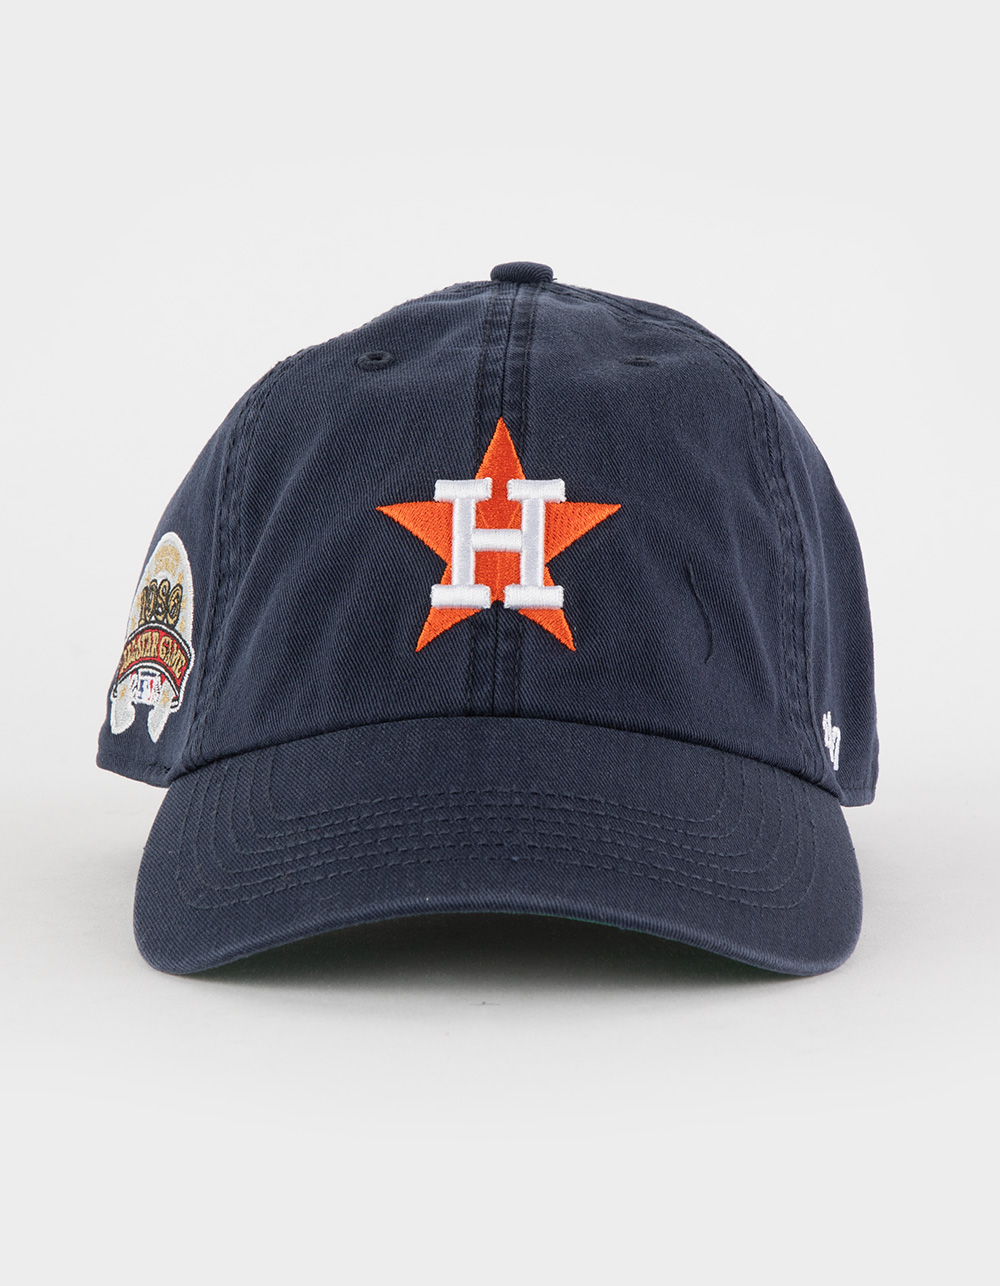 Houston Astros '47 Brand Navy Clean Up Adjustable Hat